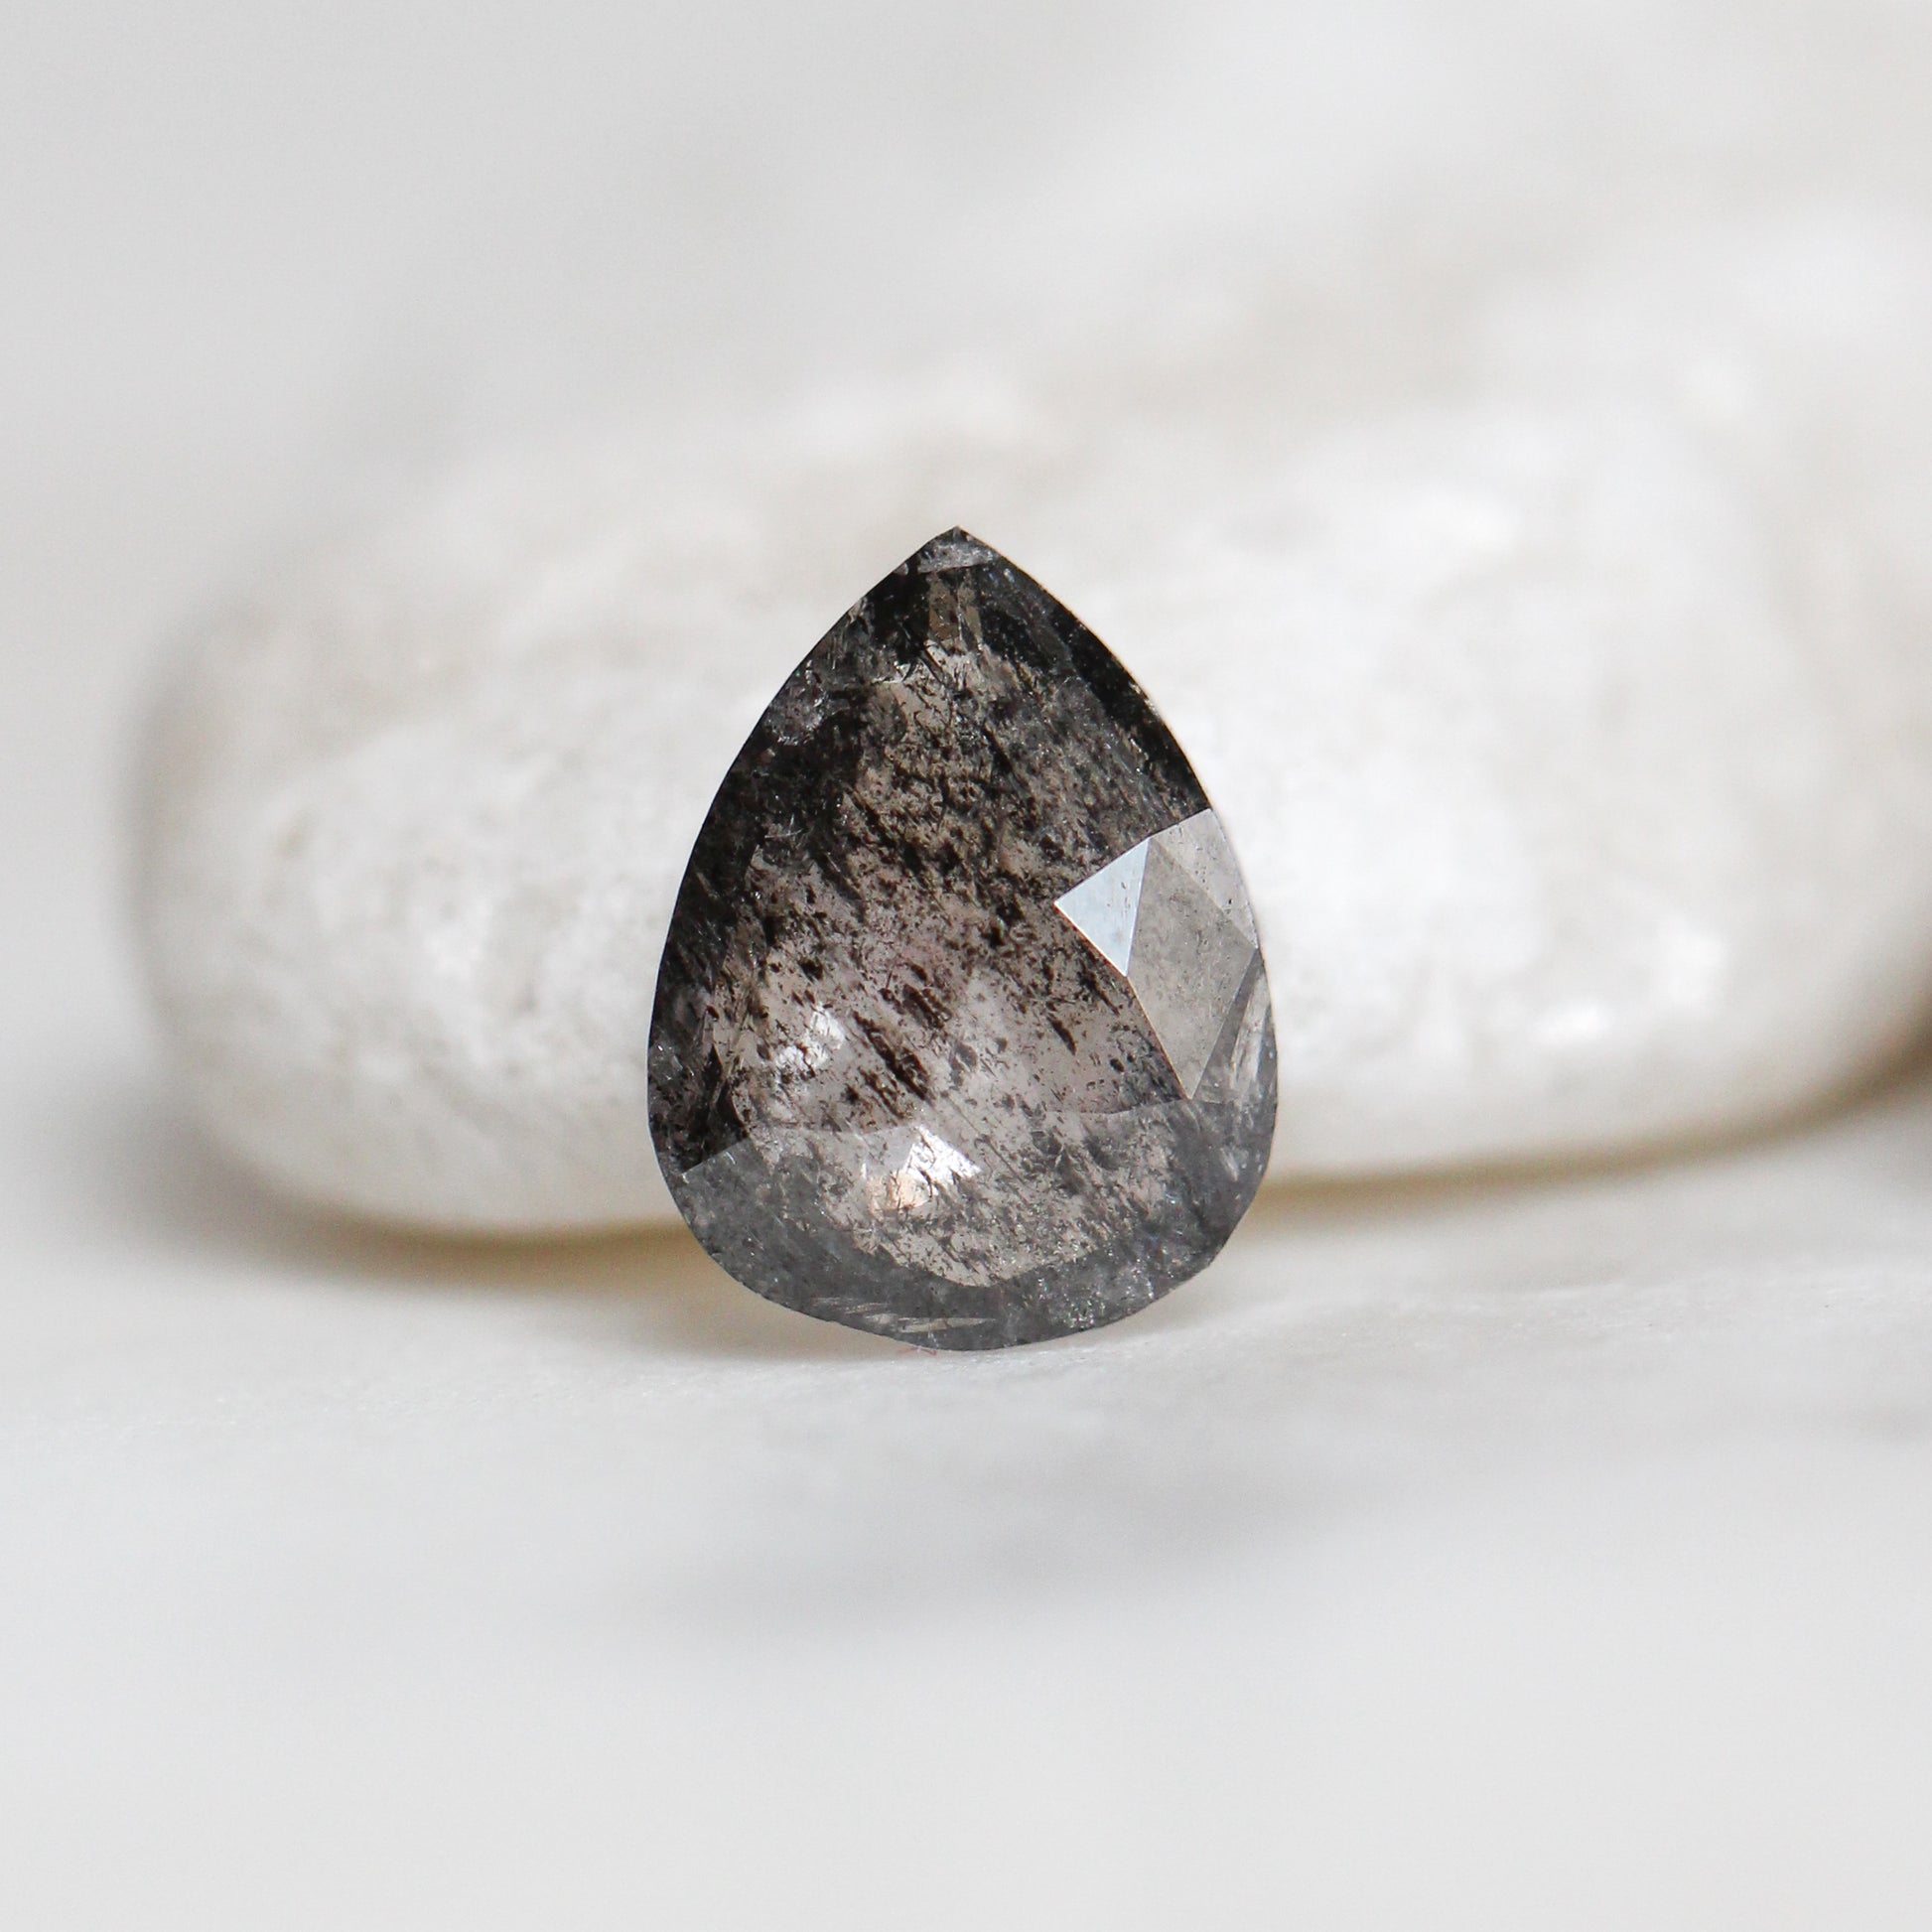 0.92 Carat Pear Dark Celestial Diamond for Custom Work - Inventory Code DCPD092 - Midwinter Co. Alternative Bridal Rings and Modern Fine Jewelry